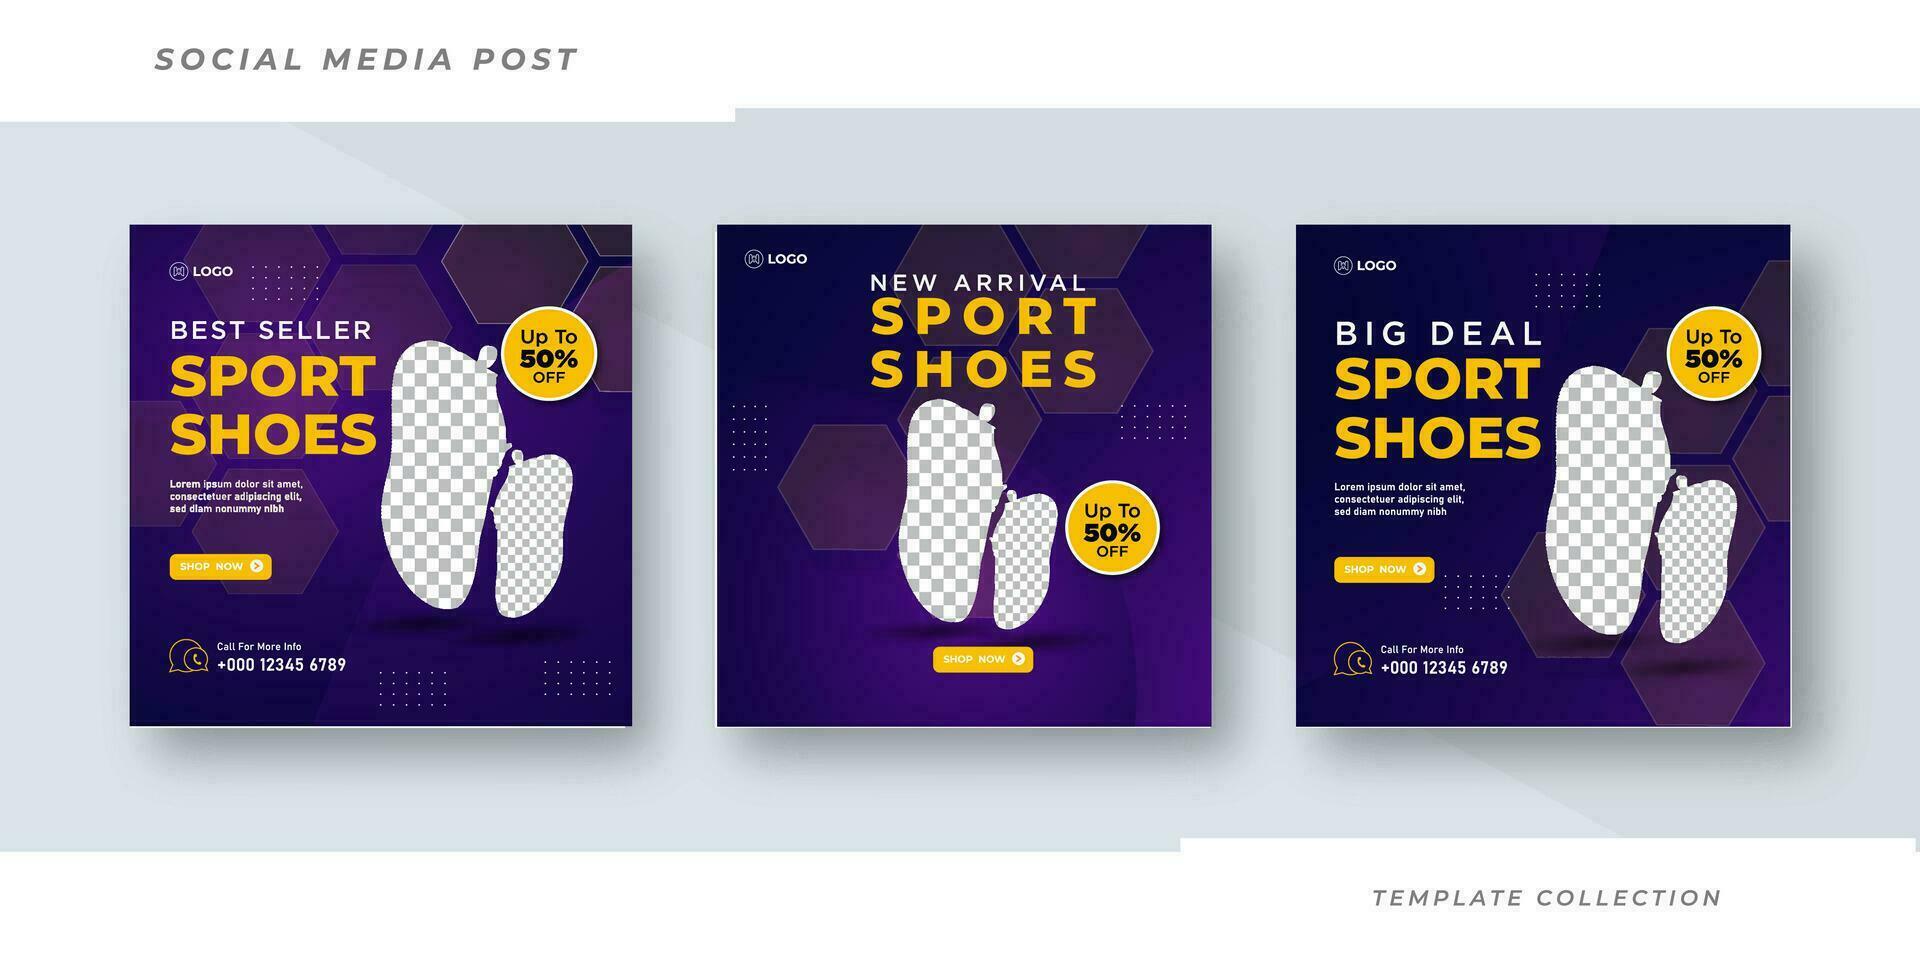 nuevo llegada deporte Zapatos Moda Zapatos rebaja marca producto social medios de comunicación bandera enviar modelo Pro vector